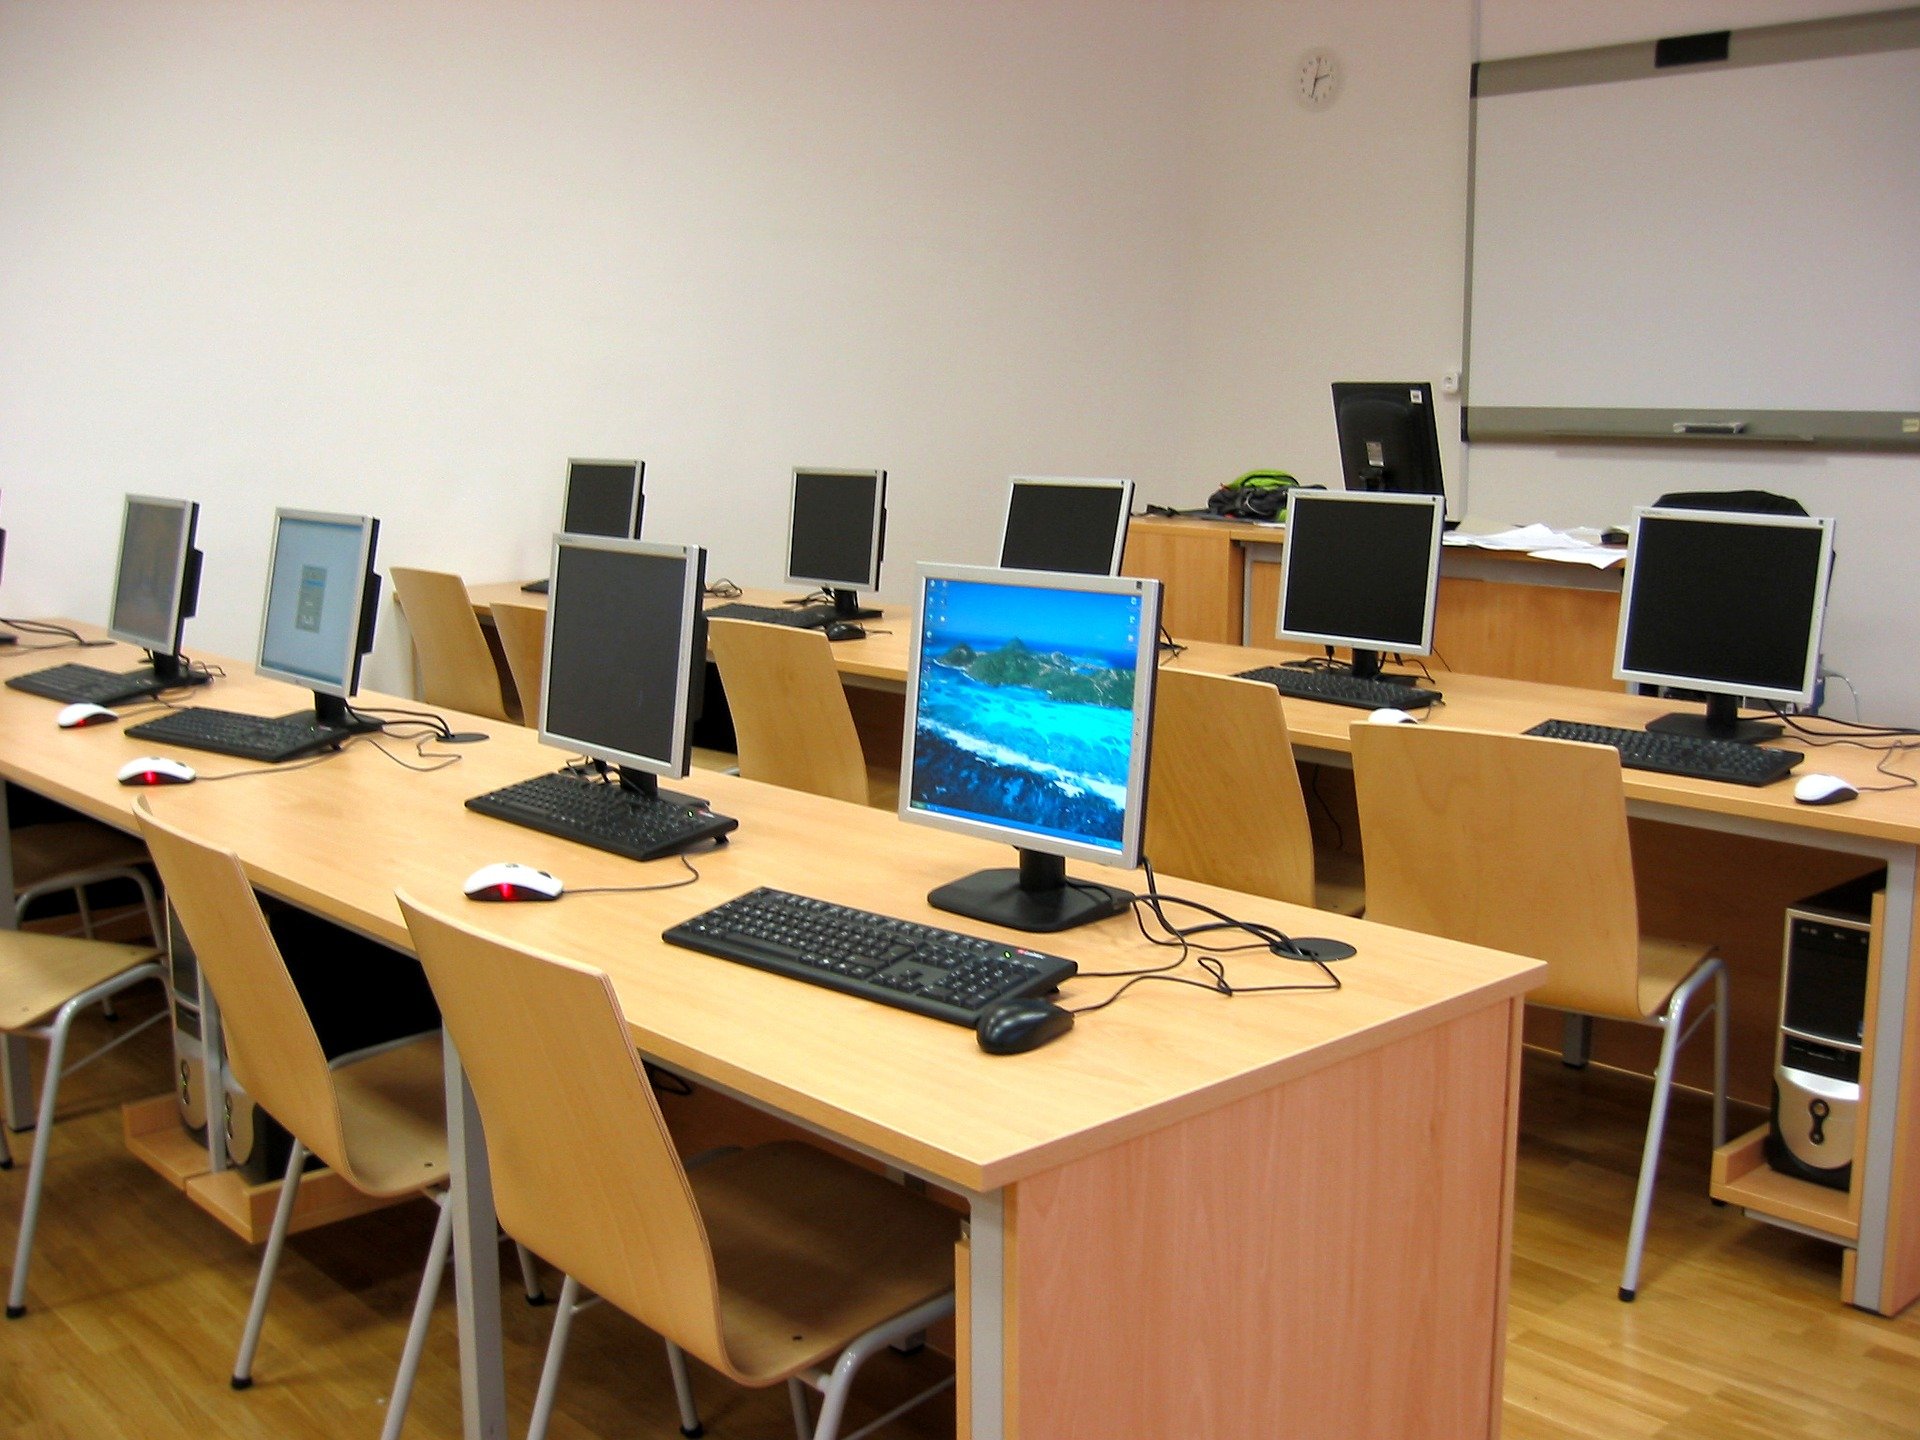 Une salle de classe informatique | Source: Pixabay